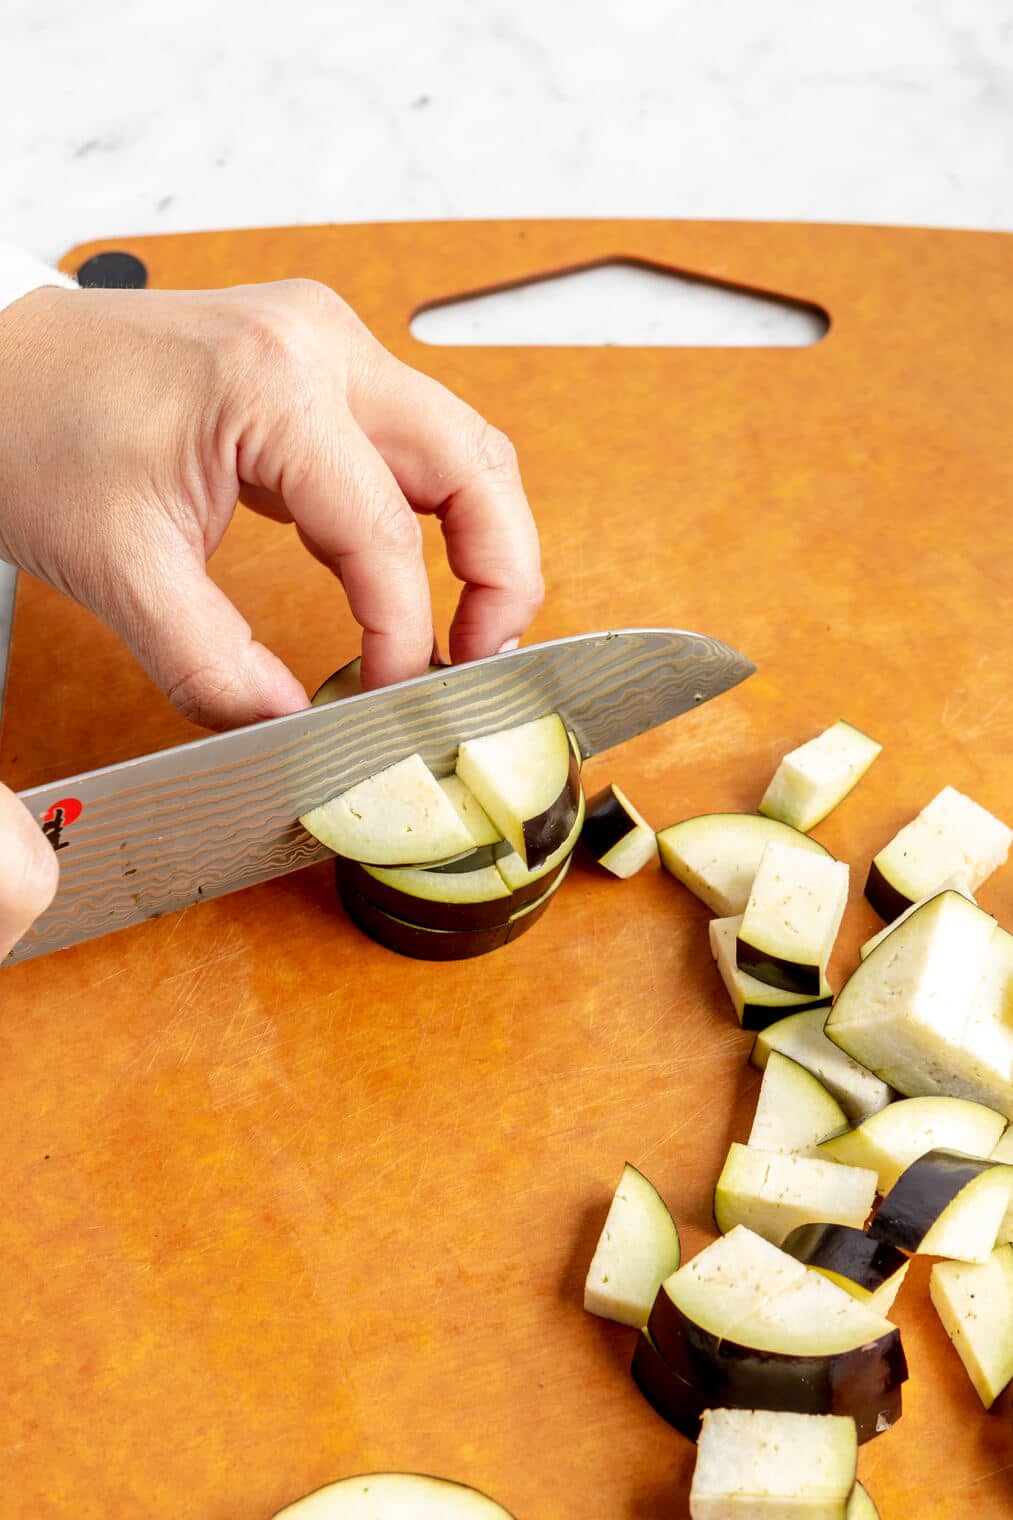 Hand cubing eggplant on an epicurean cutting board.